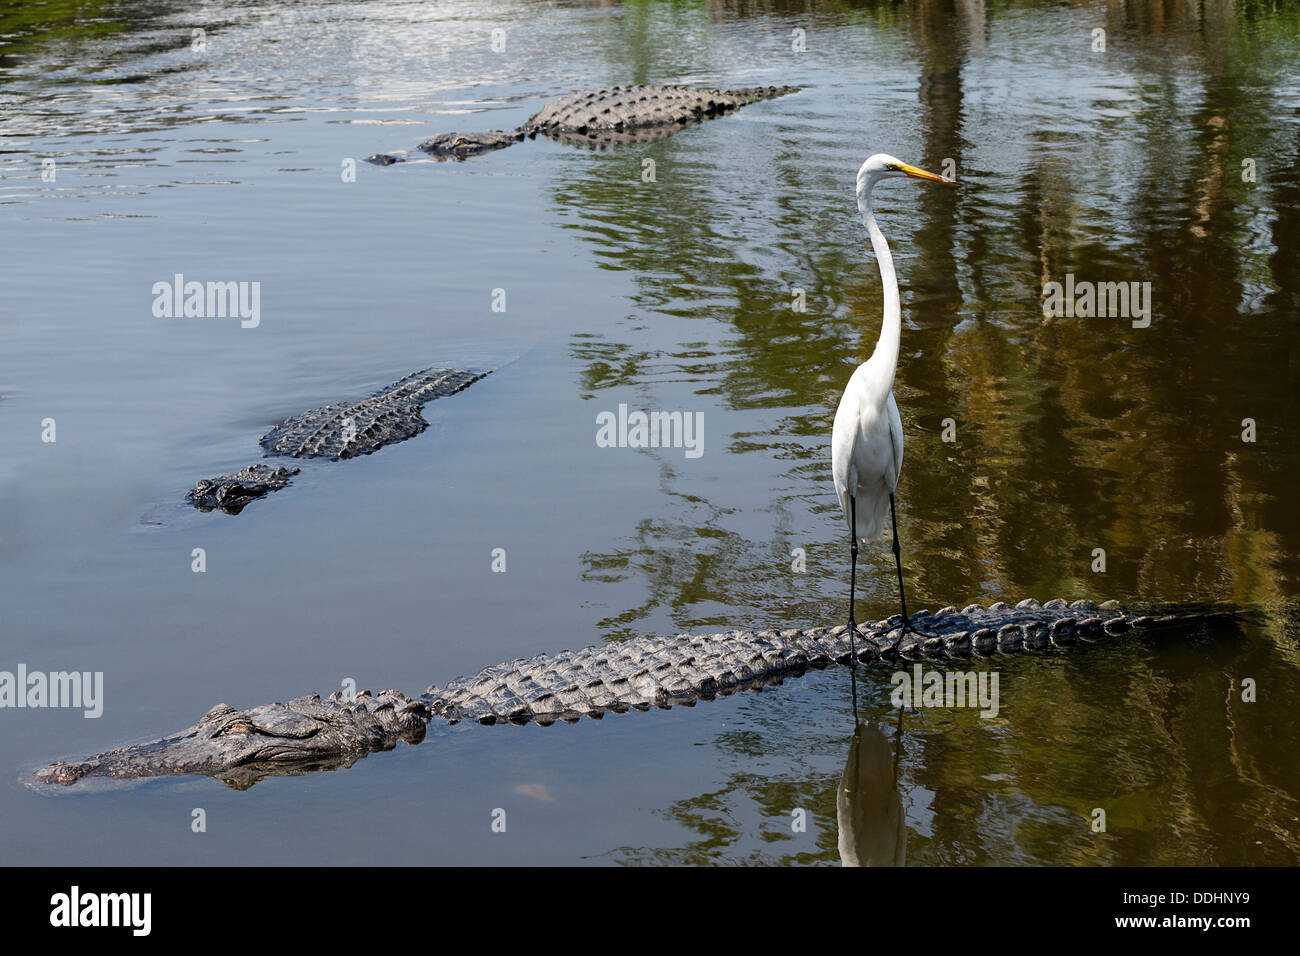 Garzetta su alligatori indietro Foto Stock